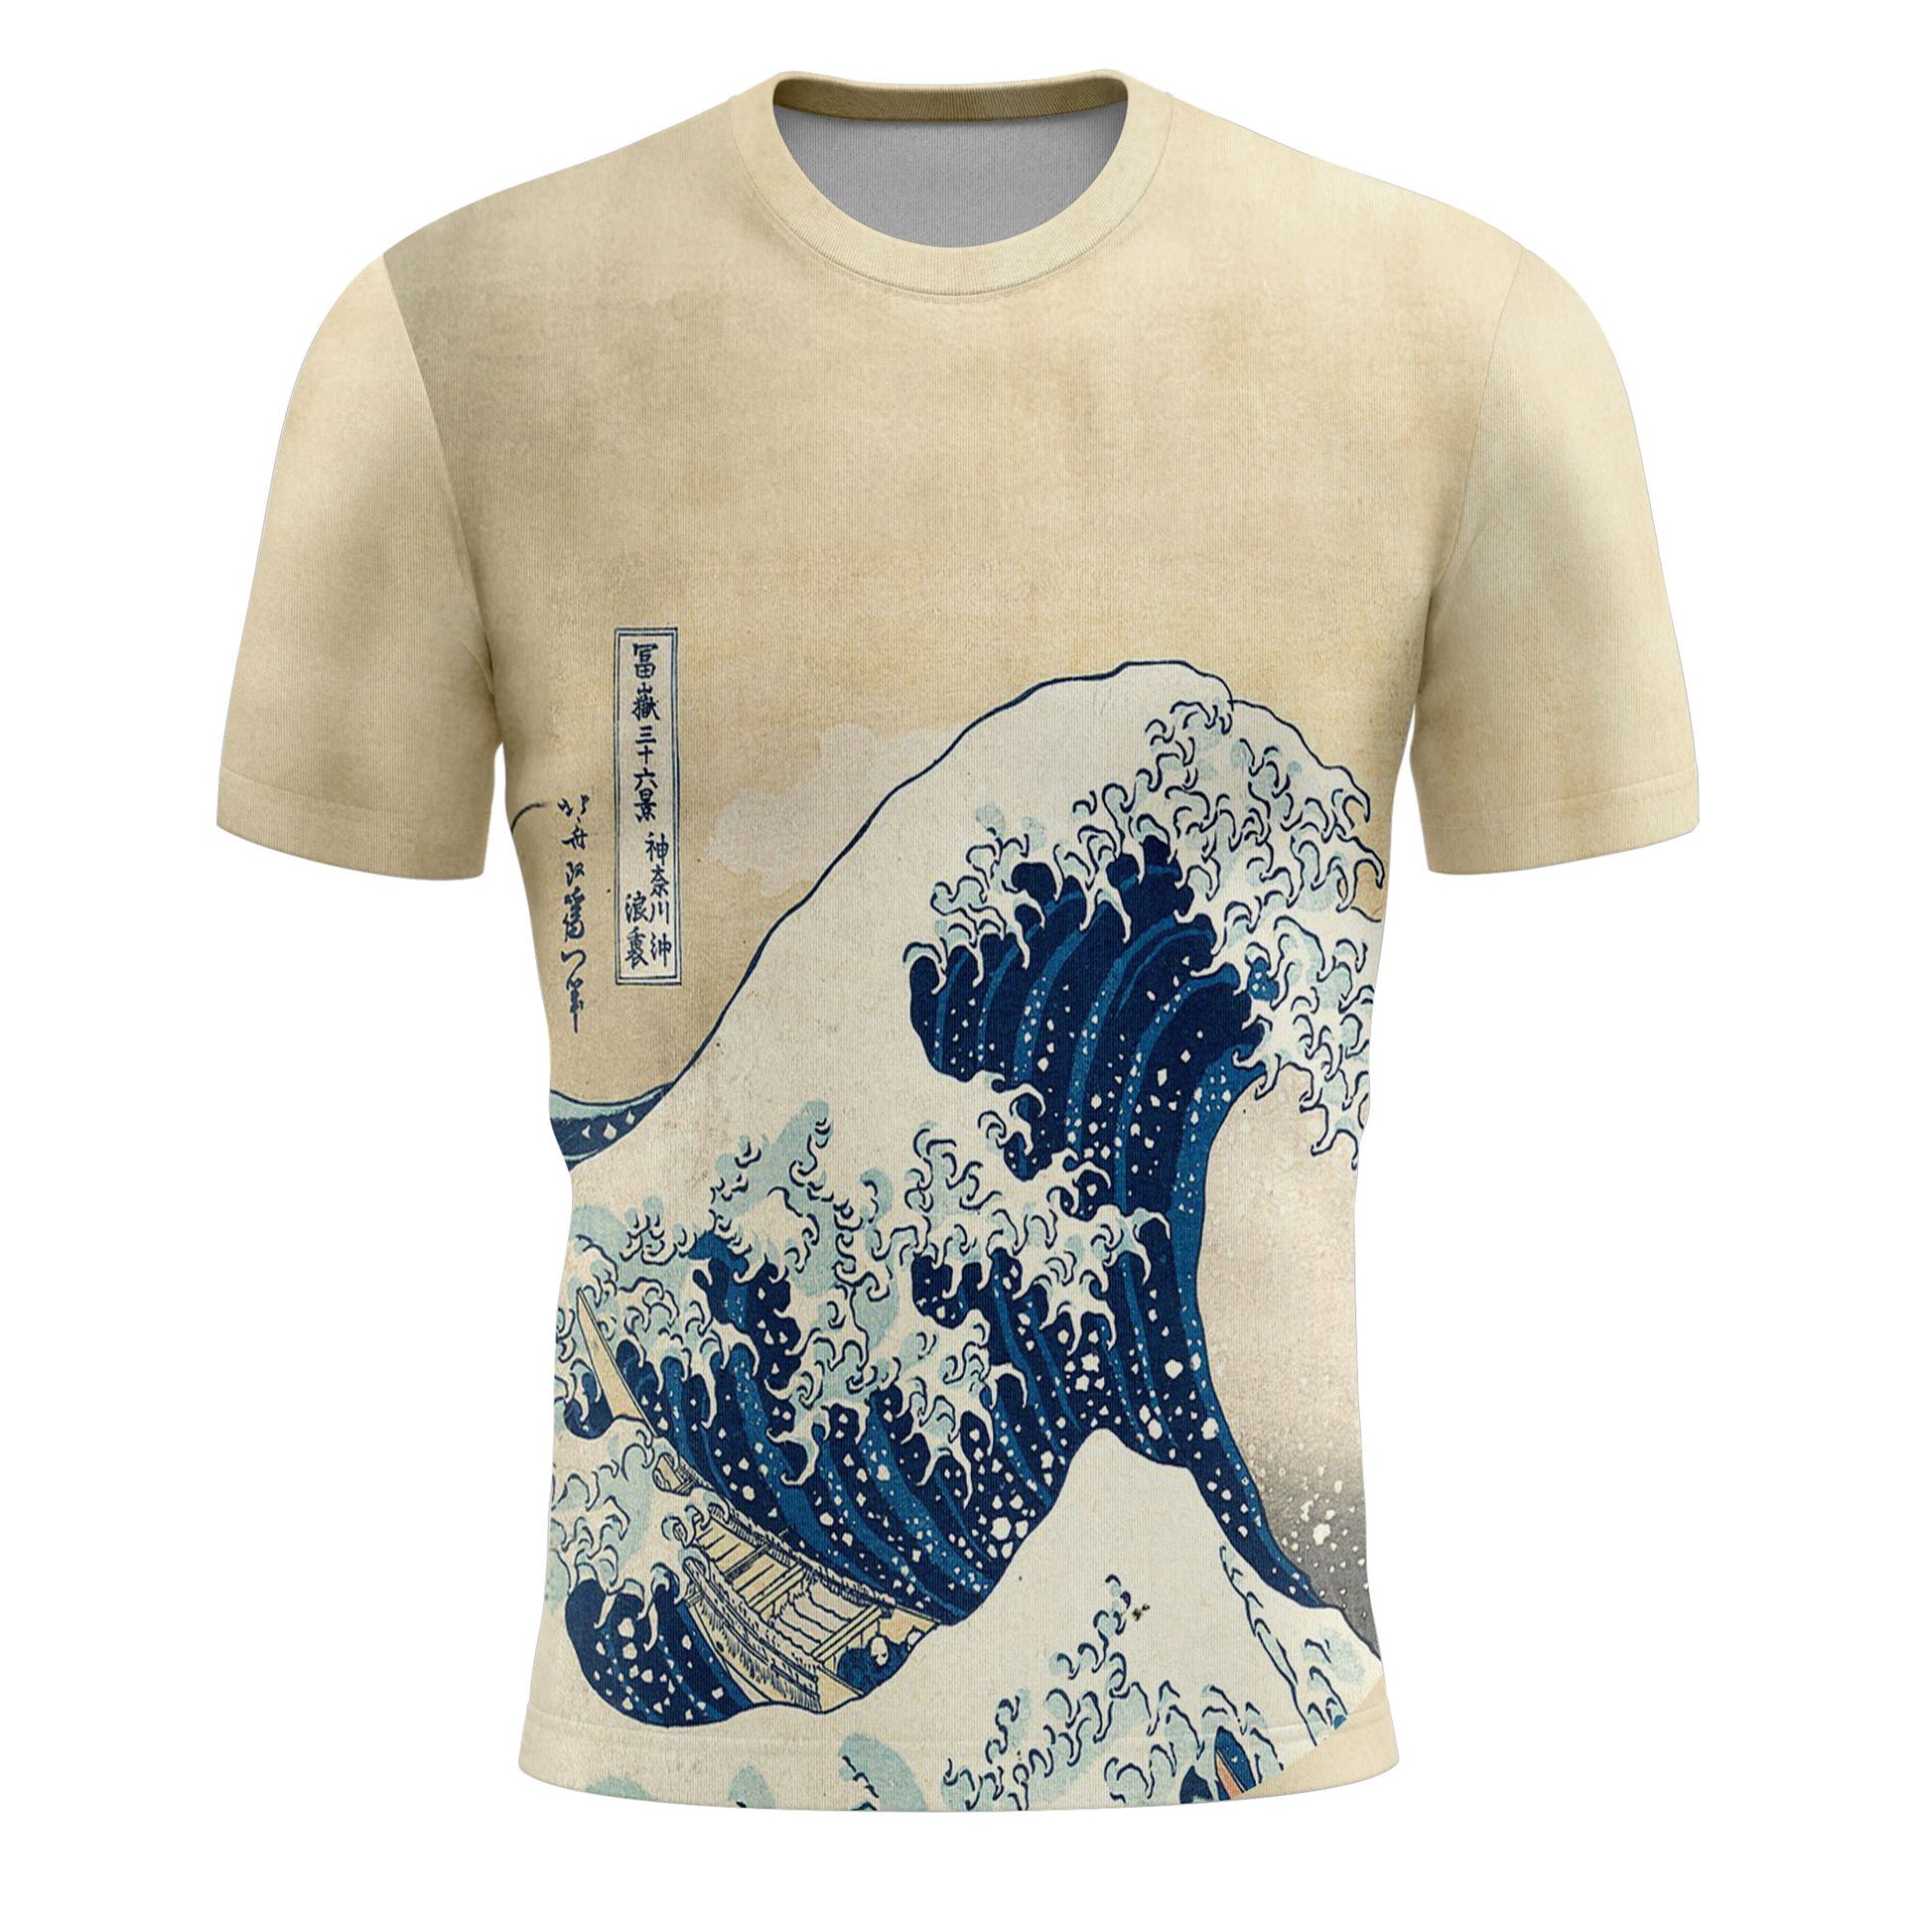 personalized custom printed t-shirts ukiyoe katsushika hokussai's the great wave off kanagawa short sleeve tee summer 5